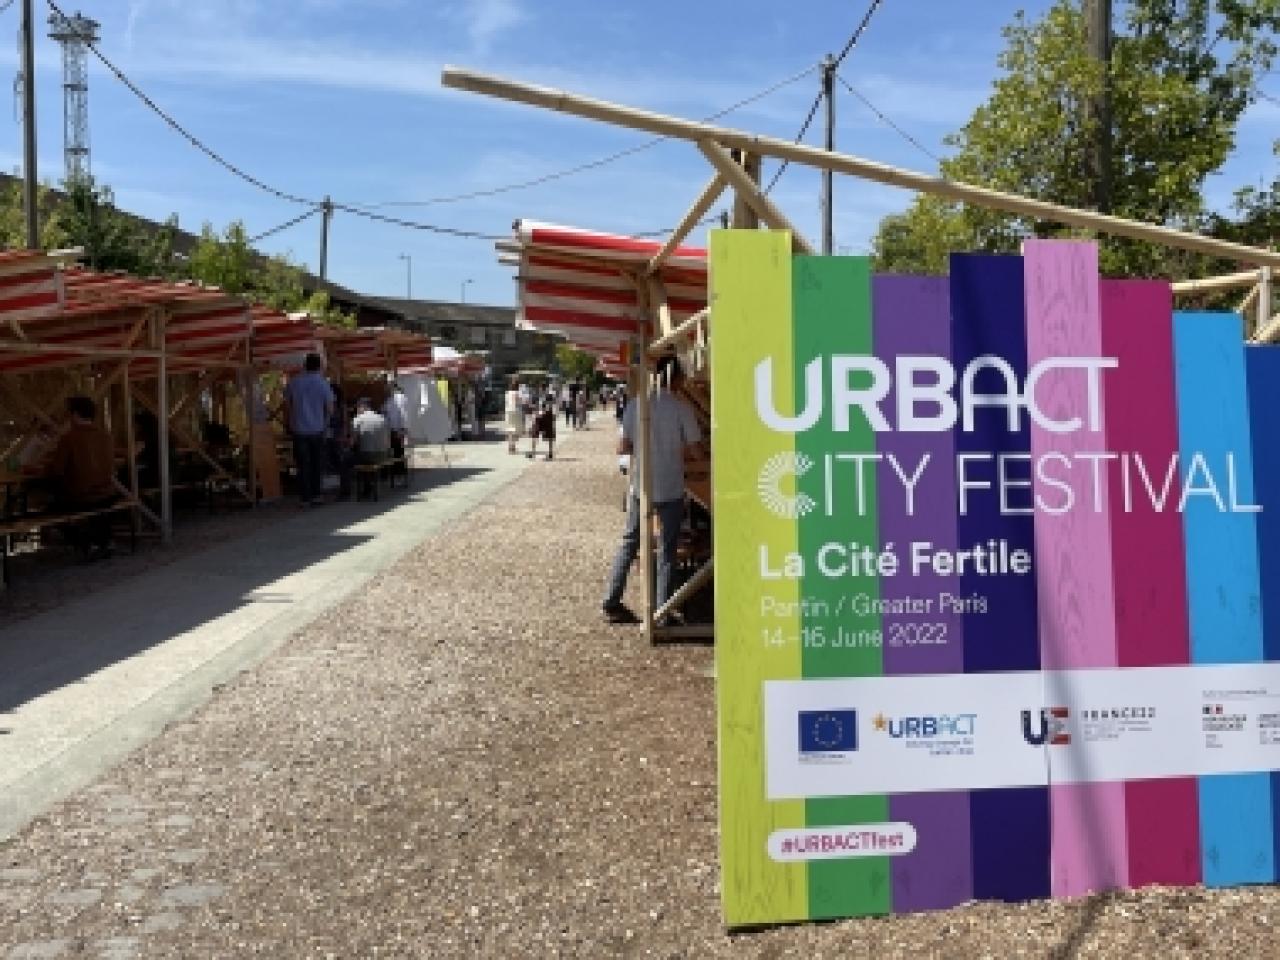 URBACT City Festival 2022 sign 